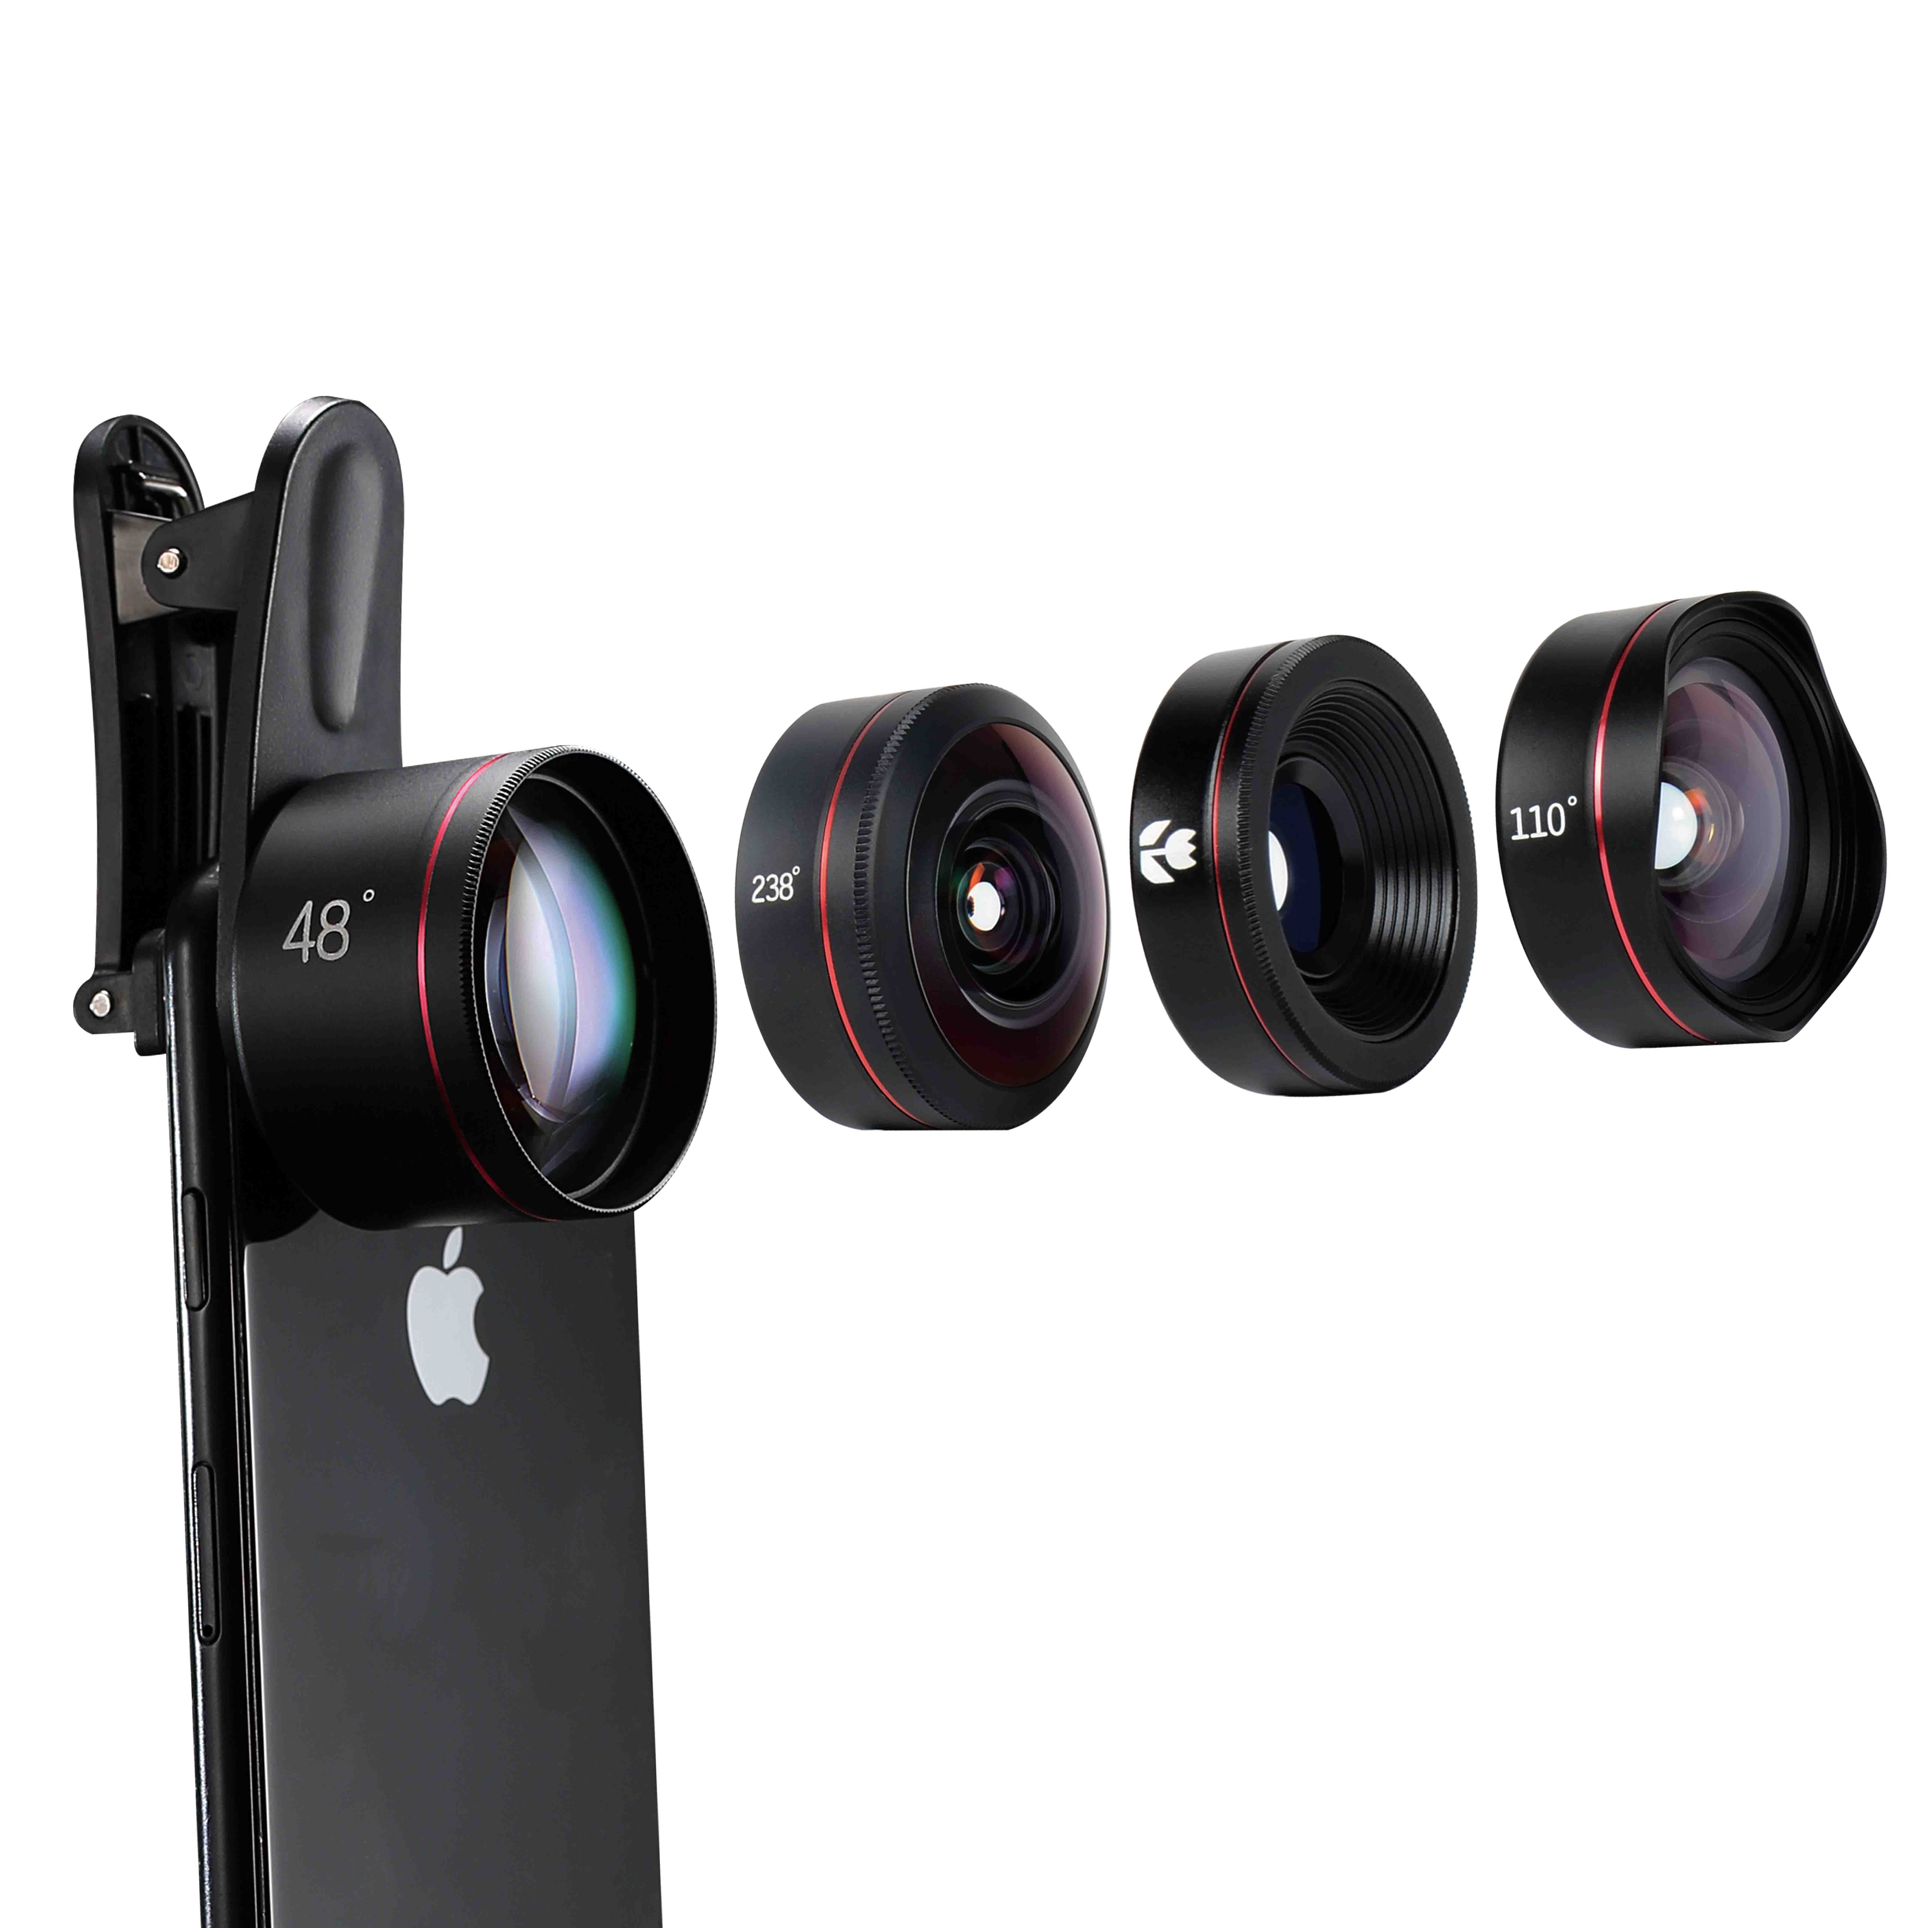 Smartphone lens II